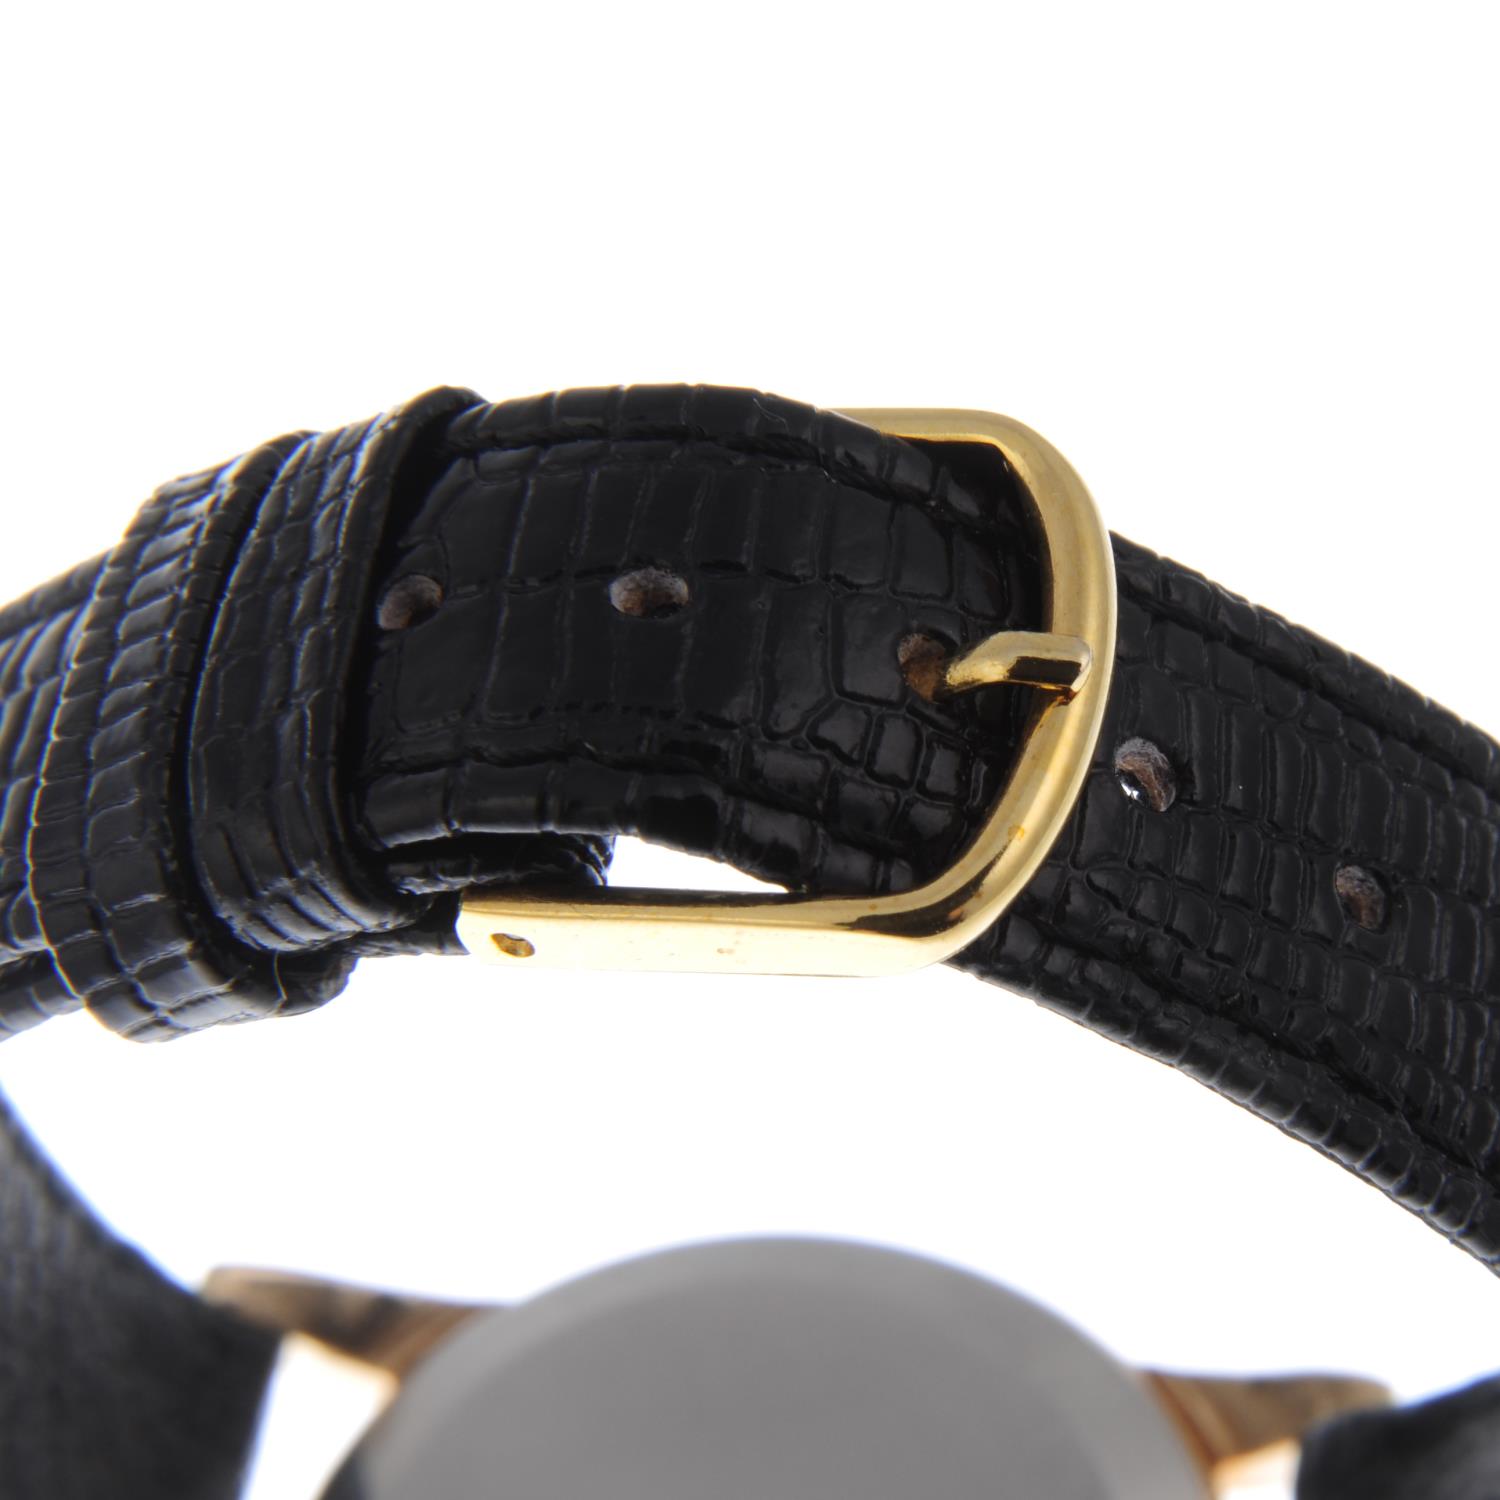 BREITLING - a gentleman's Cadette wrist watch. - Image 2 of 4